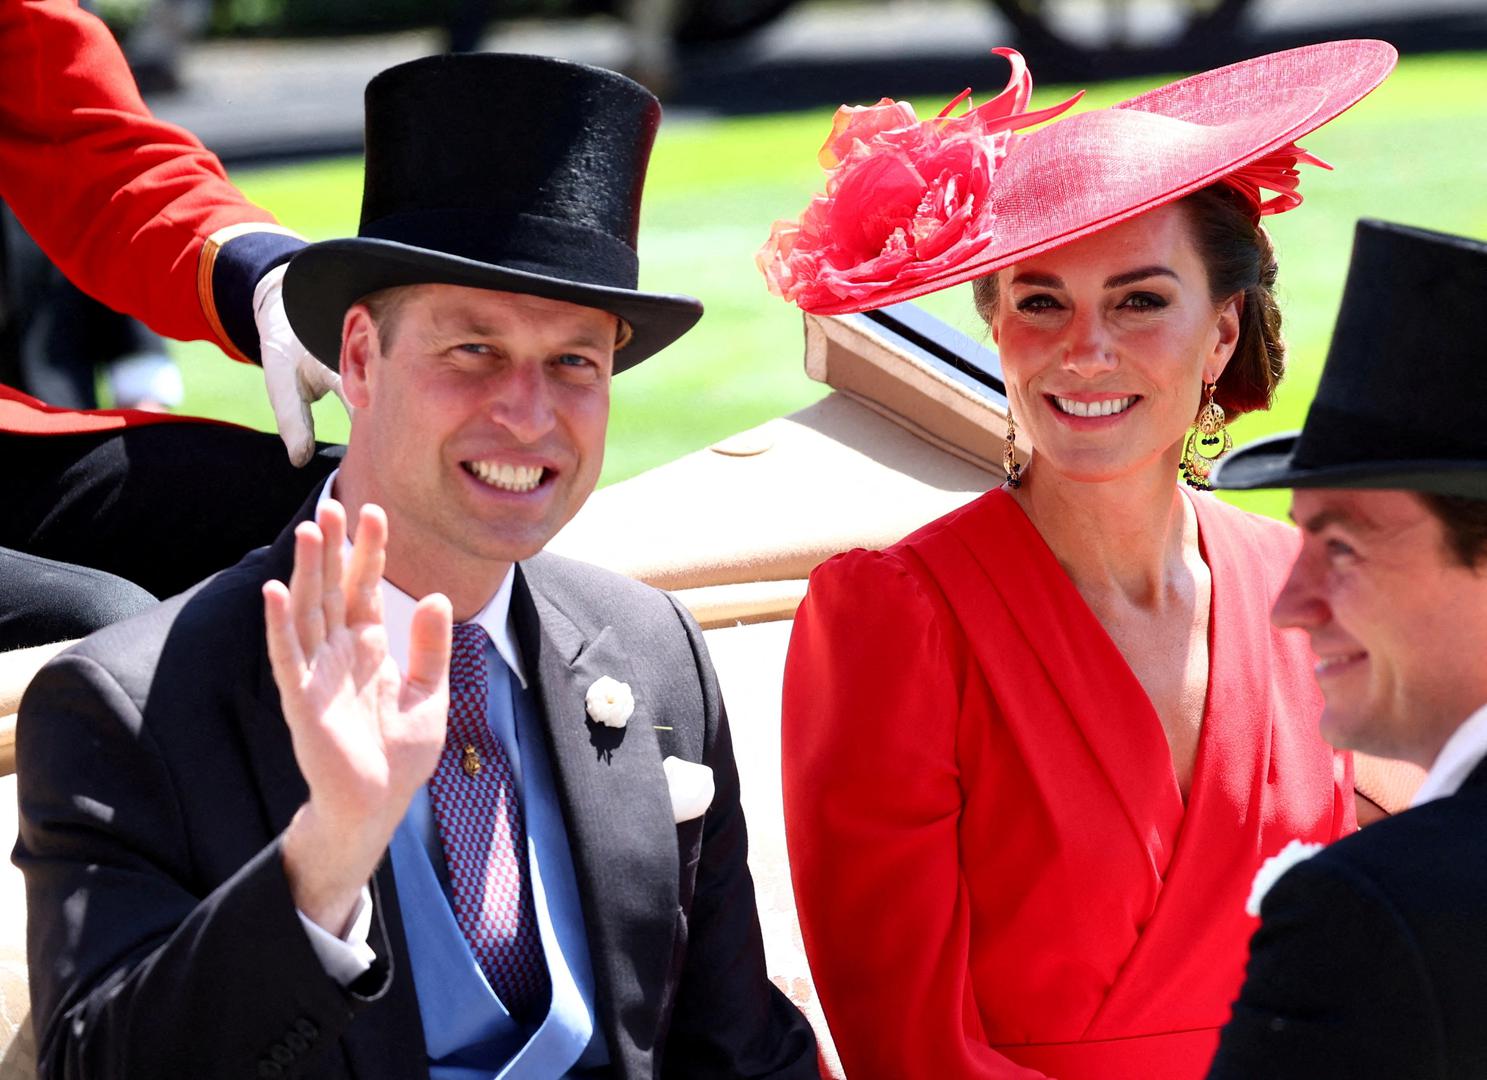 A da je Rose bliska s kraljevskom obitelji, govorio je i trenutak iz 2017. kada je sjedila pored princa Harryja na njegovu prvom državnom banketu u Buckinghamskoj palači.